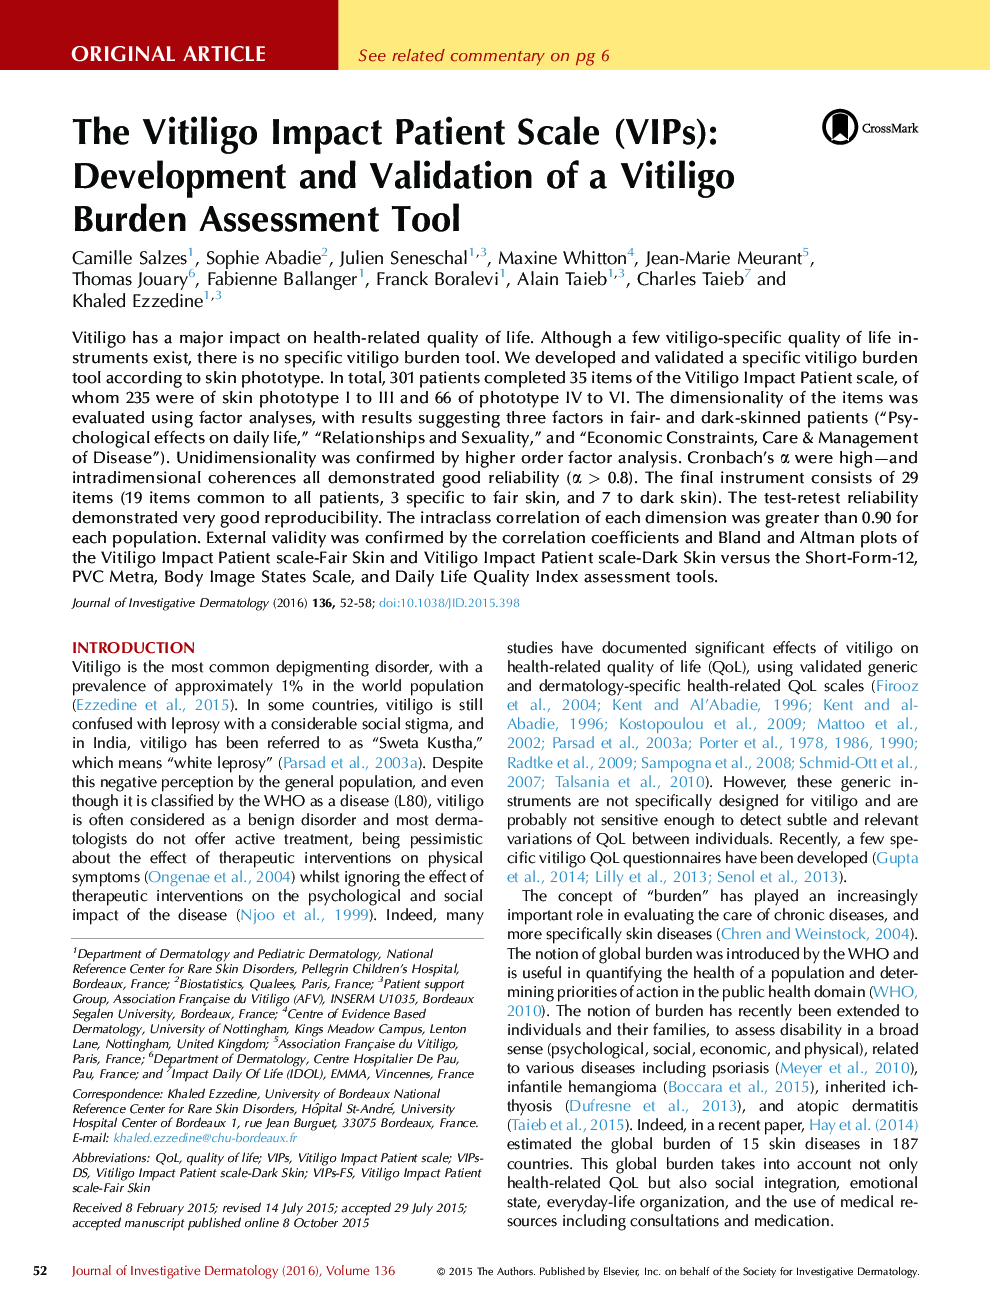 Original ArticleClinical ResearchThe Vitiligo Impact Patient Scale (VIPs): Development and Validation of a Vitiligo Burden Assessment Tool